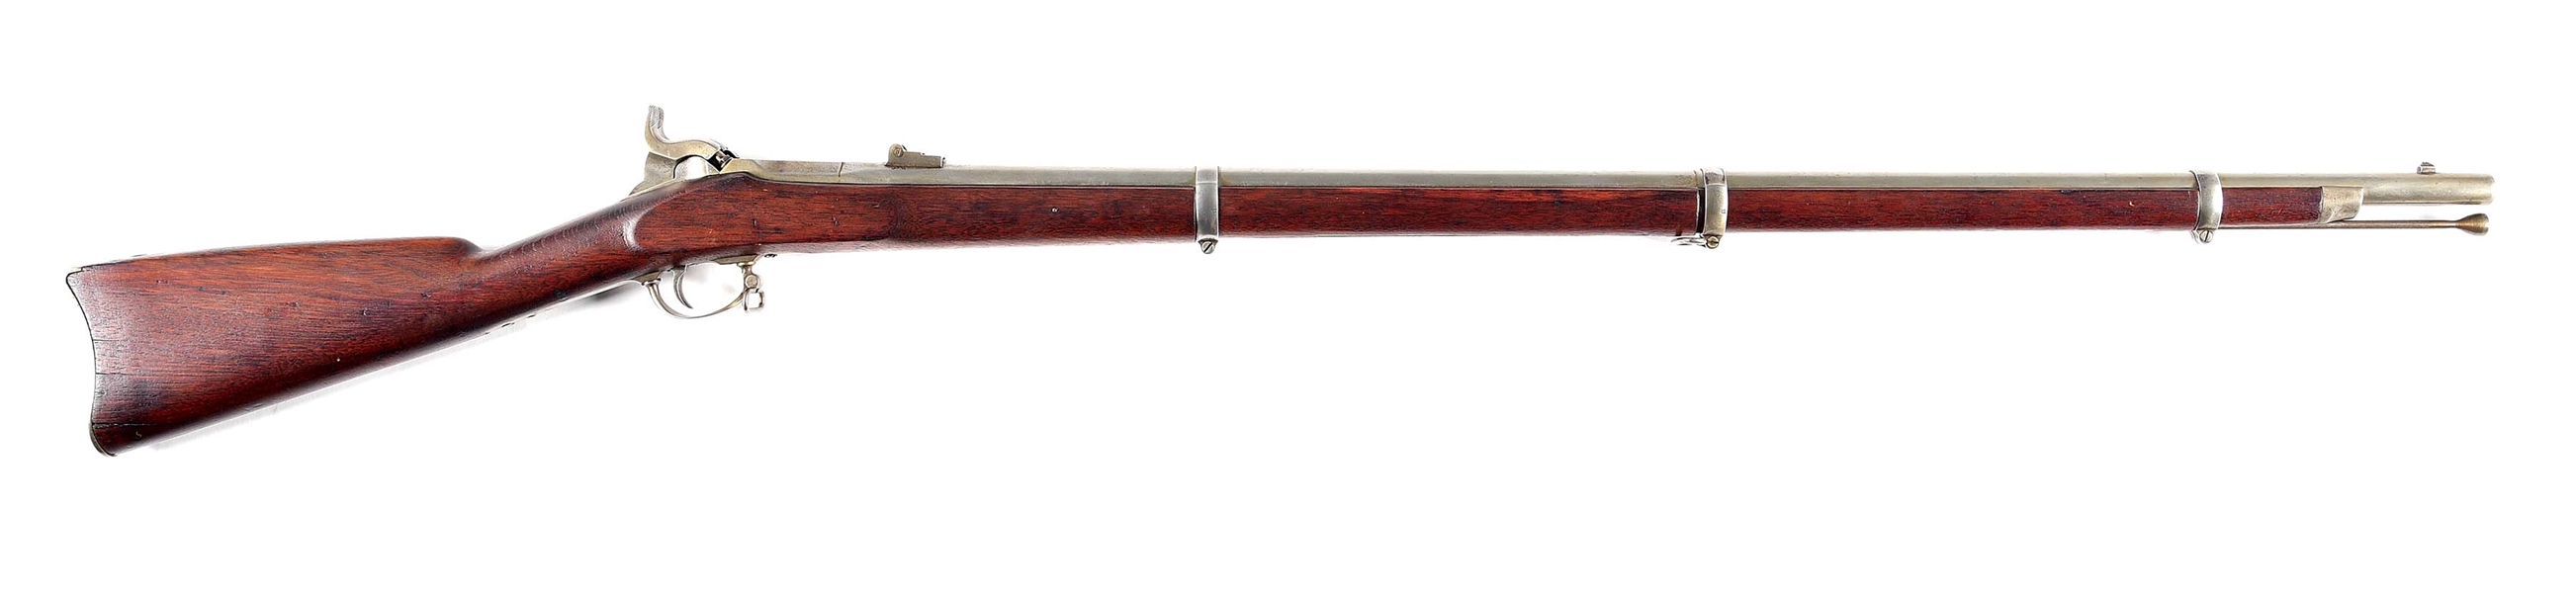 (A) LINDSAY MODEL 1863 2-SHOT .58 CALIBER MUSKET.